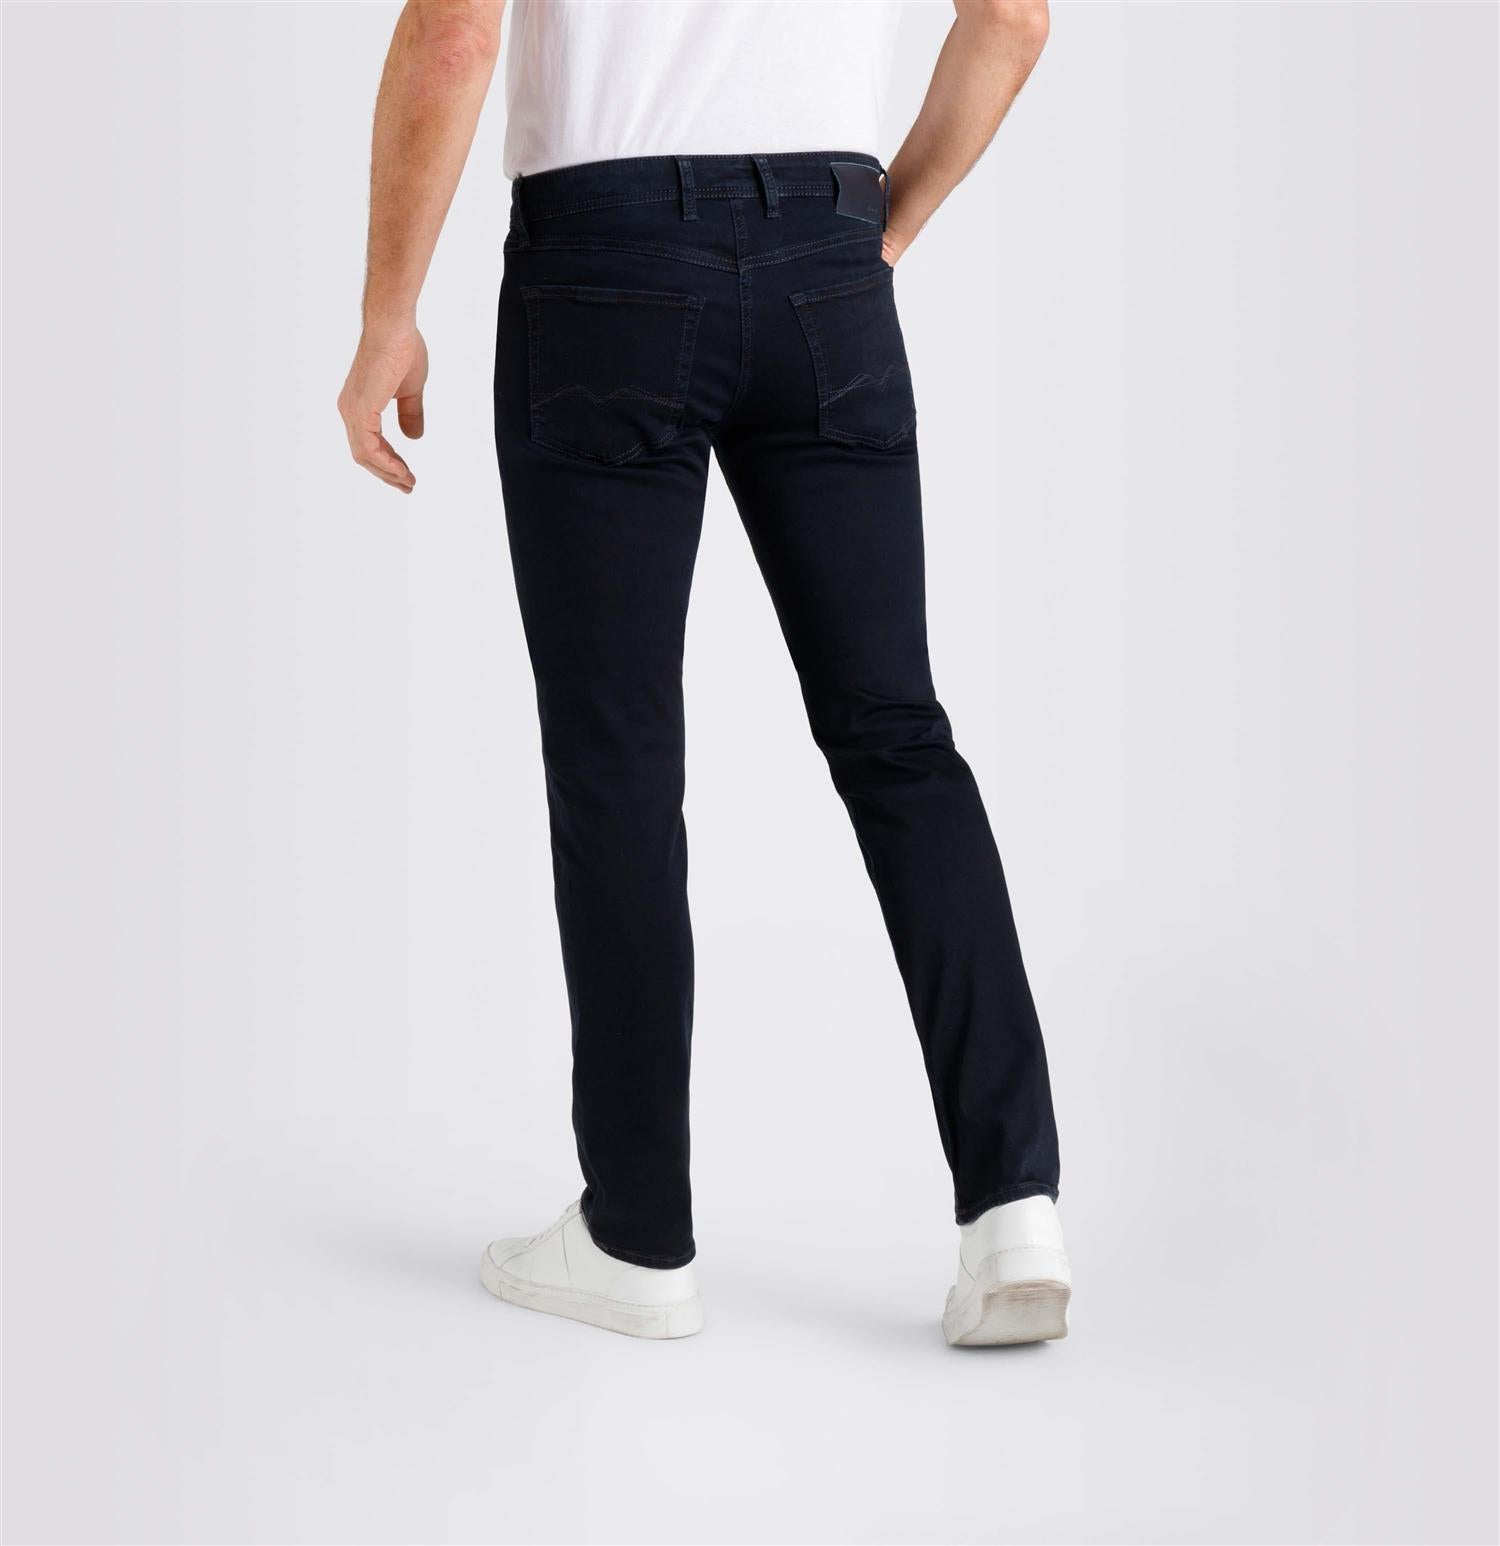 Mac Flexx Jeans blueblack –